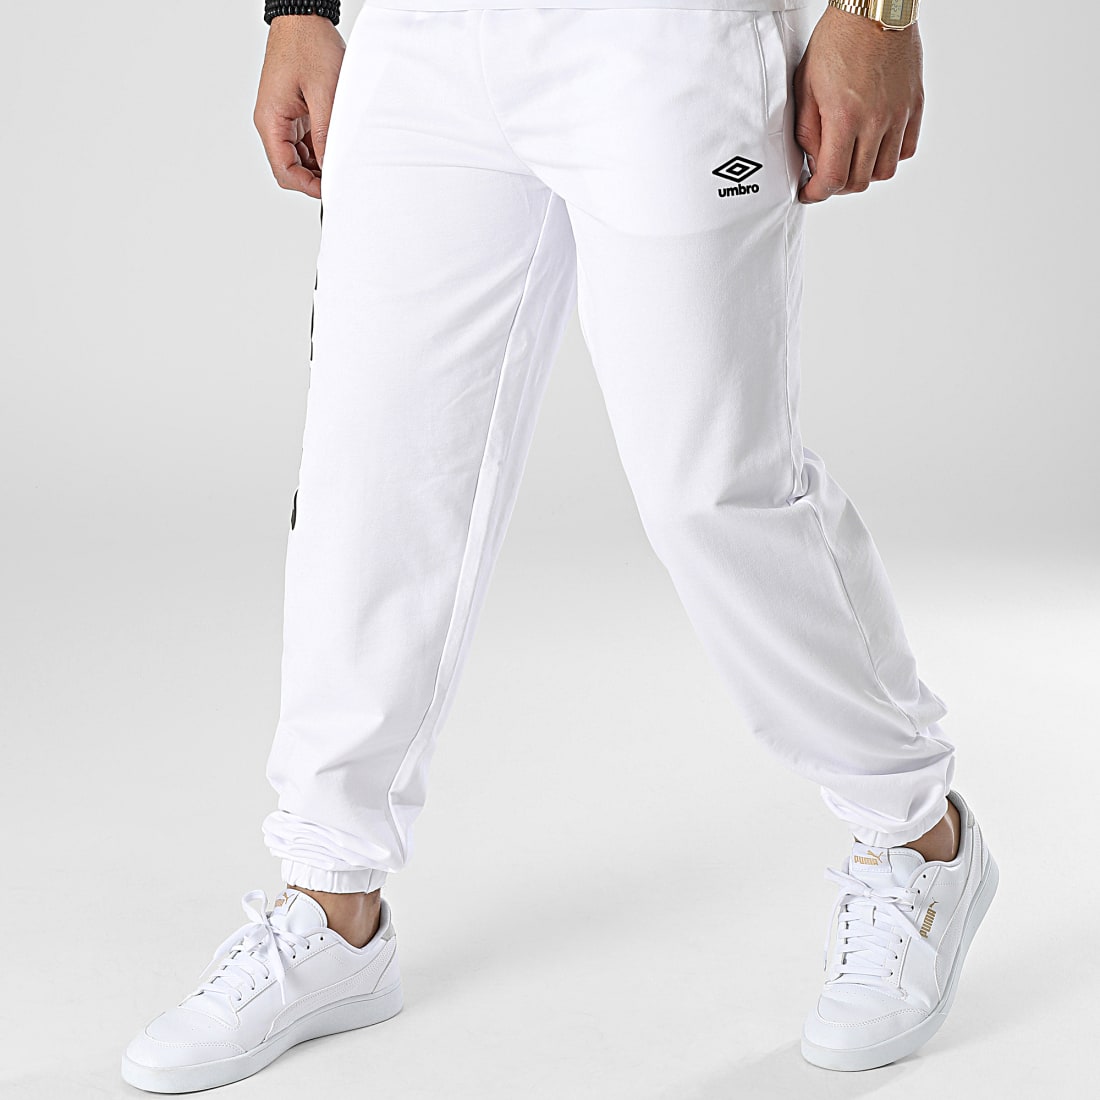 Umbro - Pantalon Jogging 771840-60 Blanc 